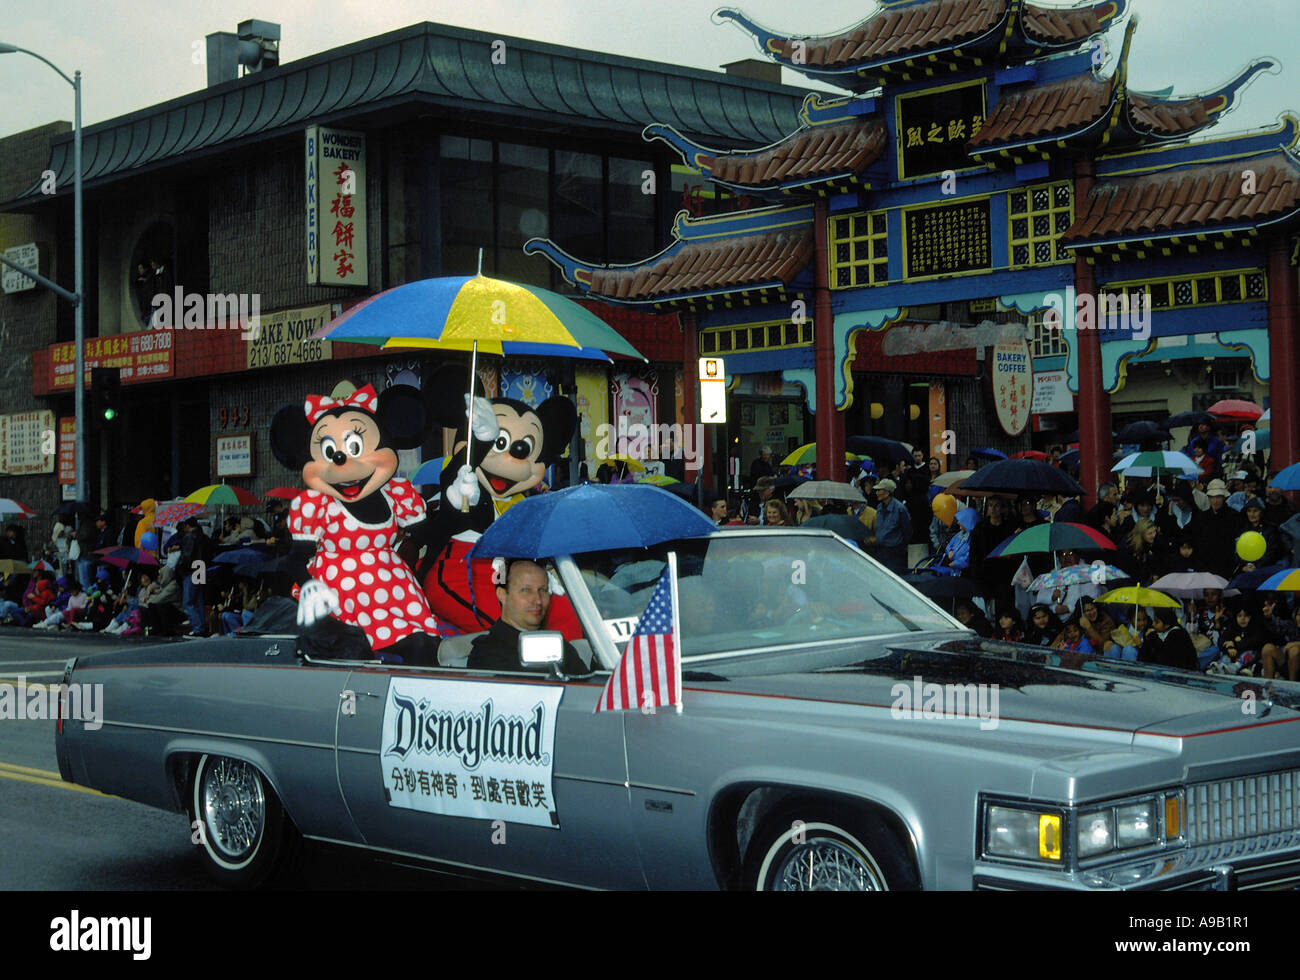 Mickey mouse auto -Fotos und -Bildmaterial in hoher Auflösung – Alamy